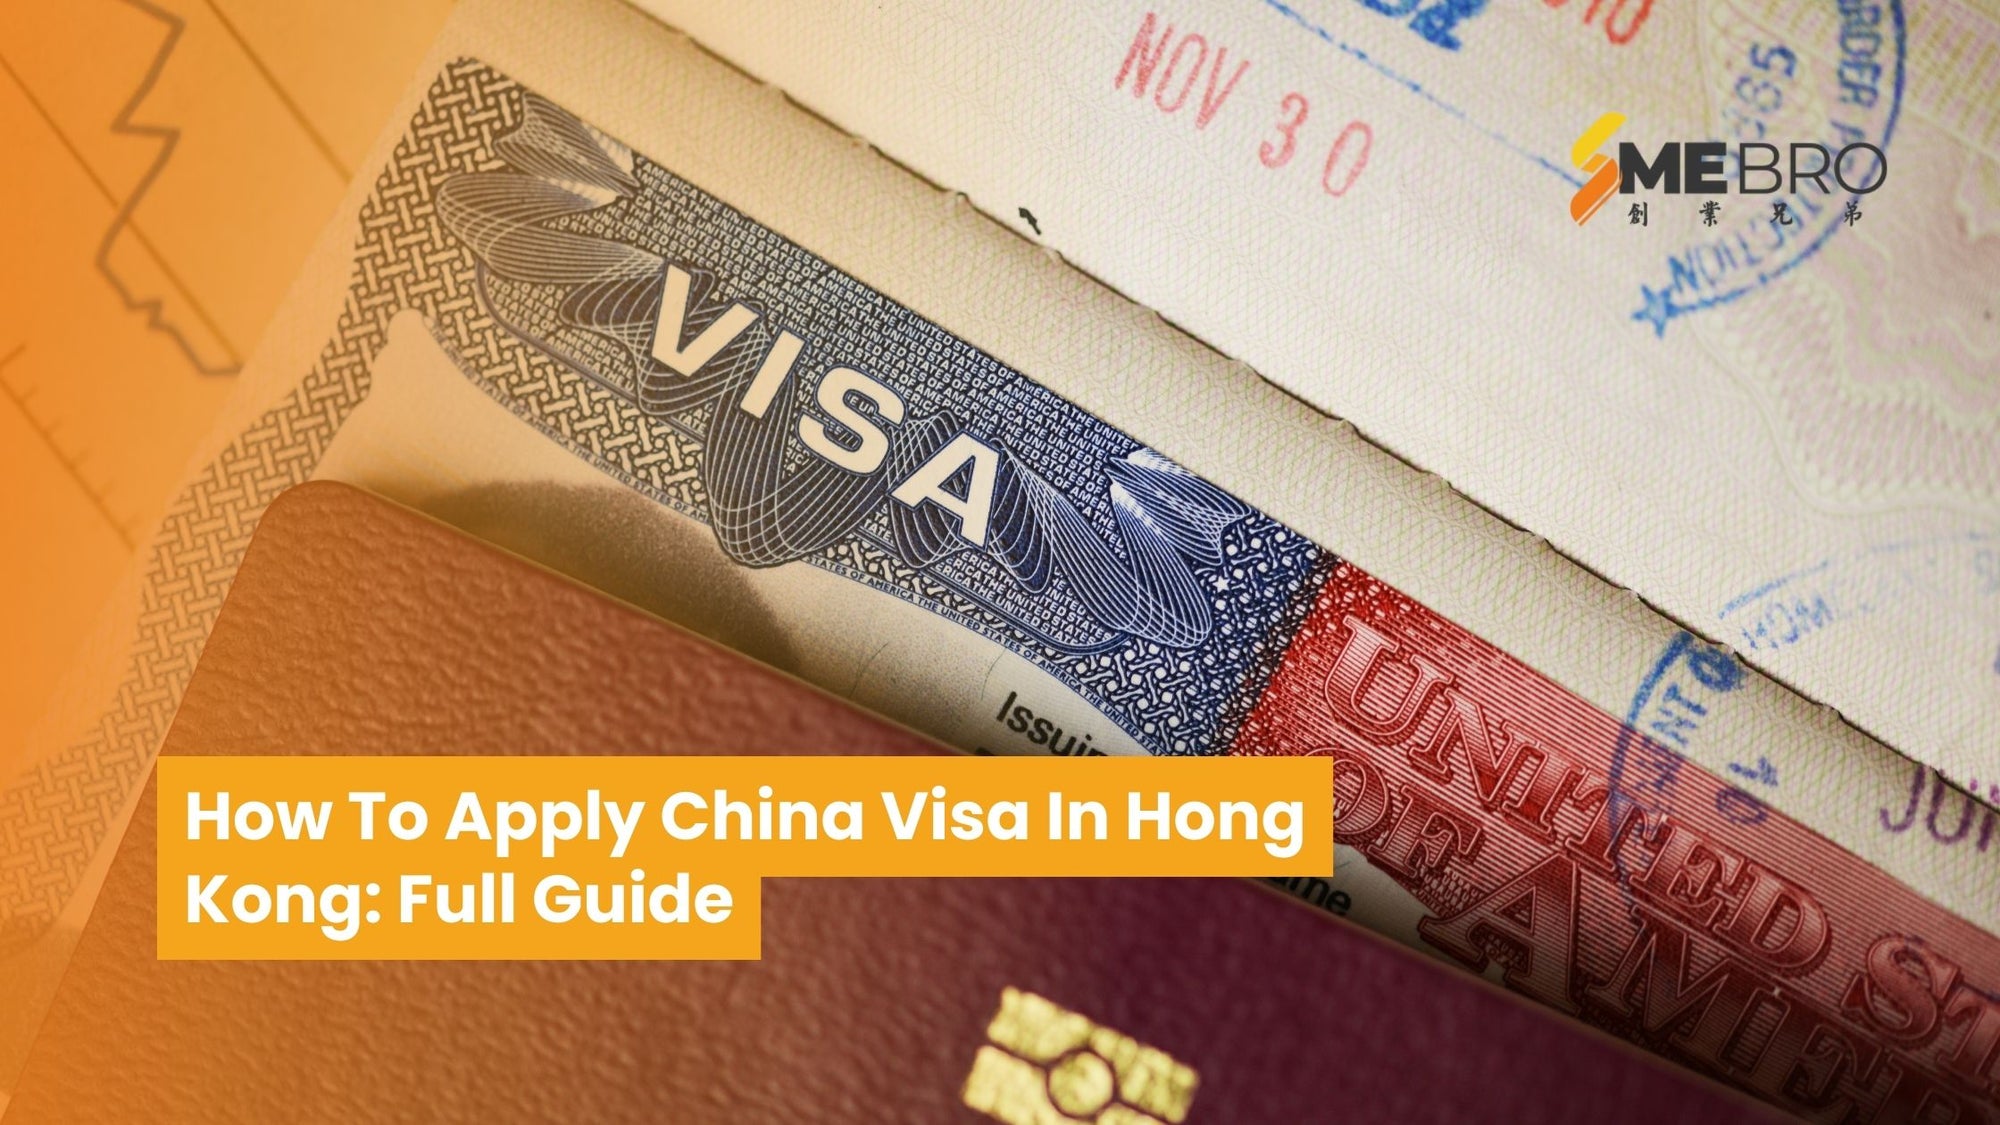 How To Apply China Visa In Hong Kong: Full Guide